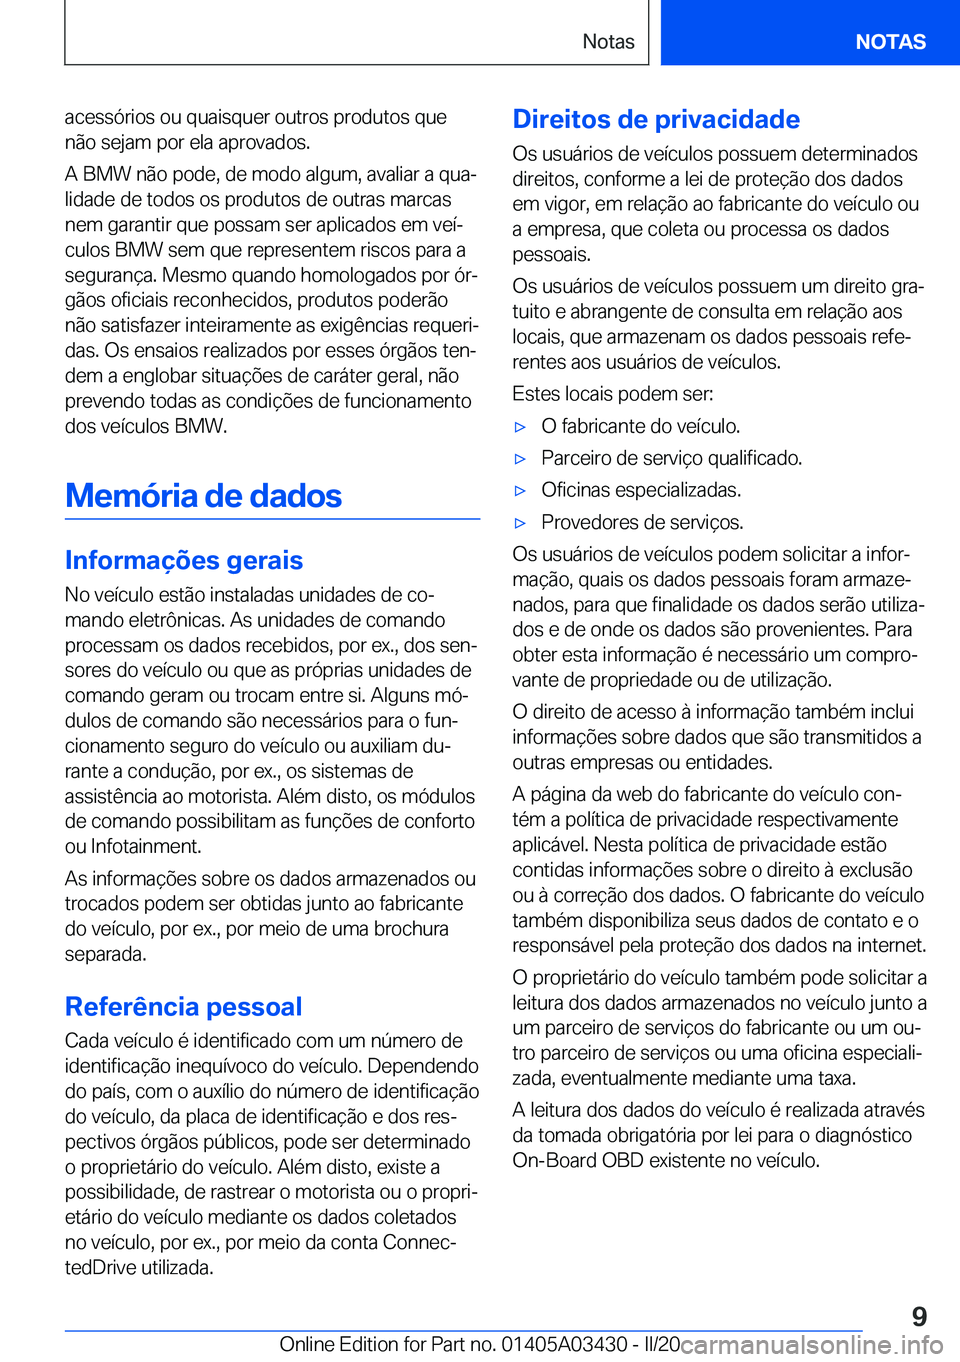 BMW X6 M 2020  Manual do condutor (in Portuguese) �a�c�e�s�s�ó�r�i�o�s��o�u��q�u�a�i�s�q�u�e�r��o�u�t�r�o�s��p�r�o�d�u�t�o�s��q�u�e
�n�ã�o��s�e�j�a�m��p�o�r��e�l�a��a�p�r�o�v�a�d�o�s�.
�A��B�M�W��n�ã�o��p�o�d�e�,��d�e��m�o�d�o��a�l�